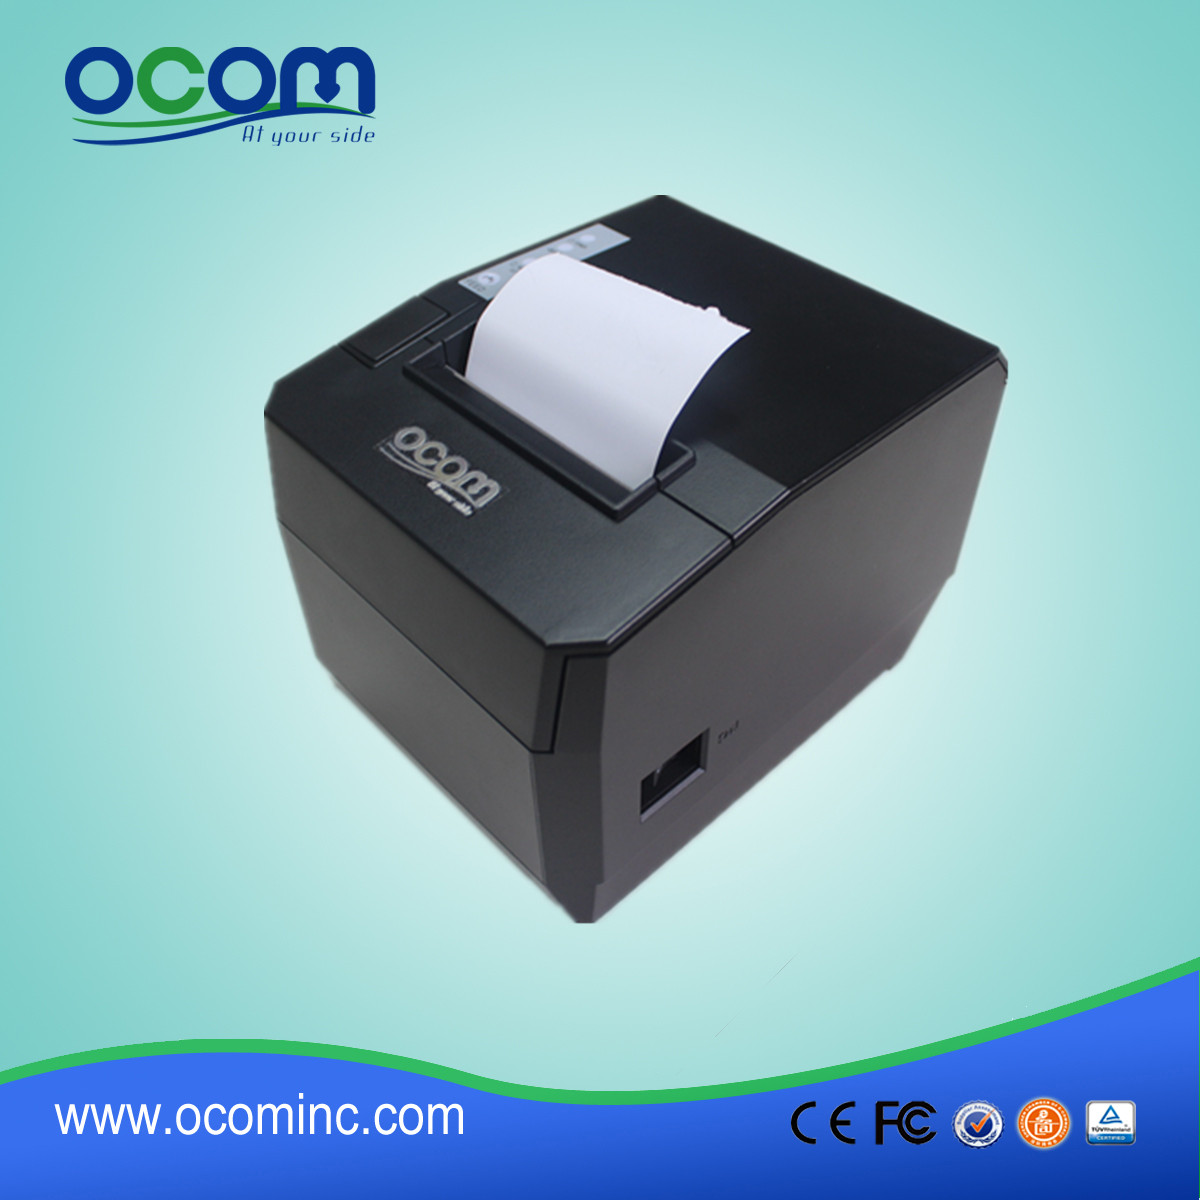 80mm Bluetooth thermische printer OCPP-88A